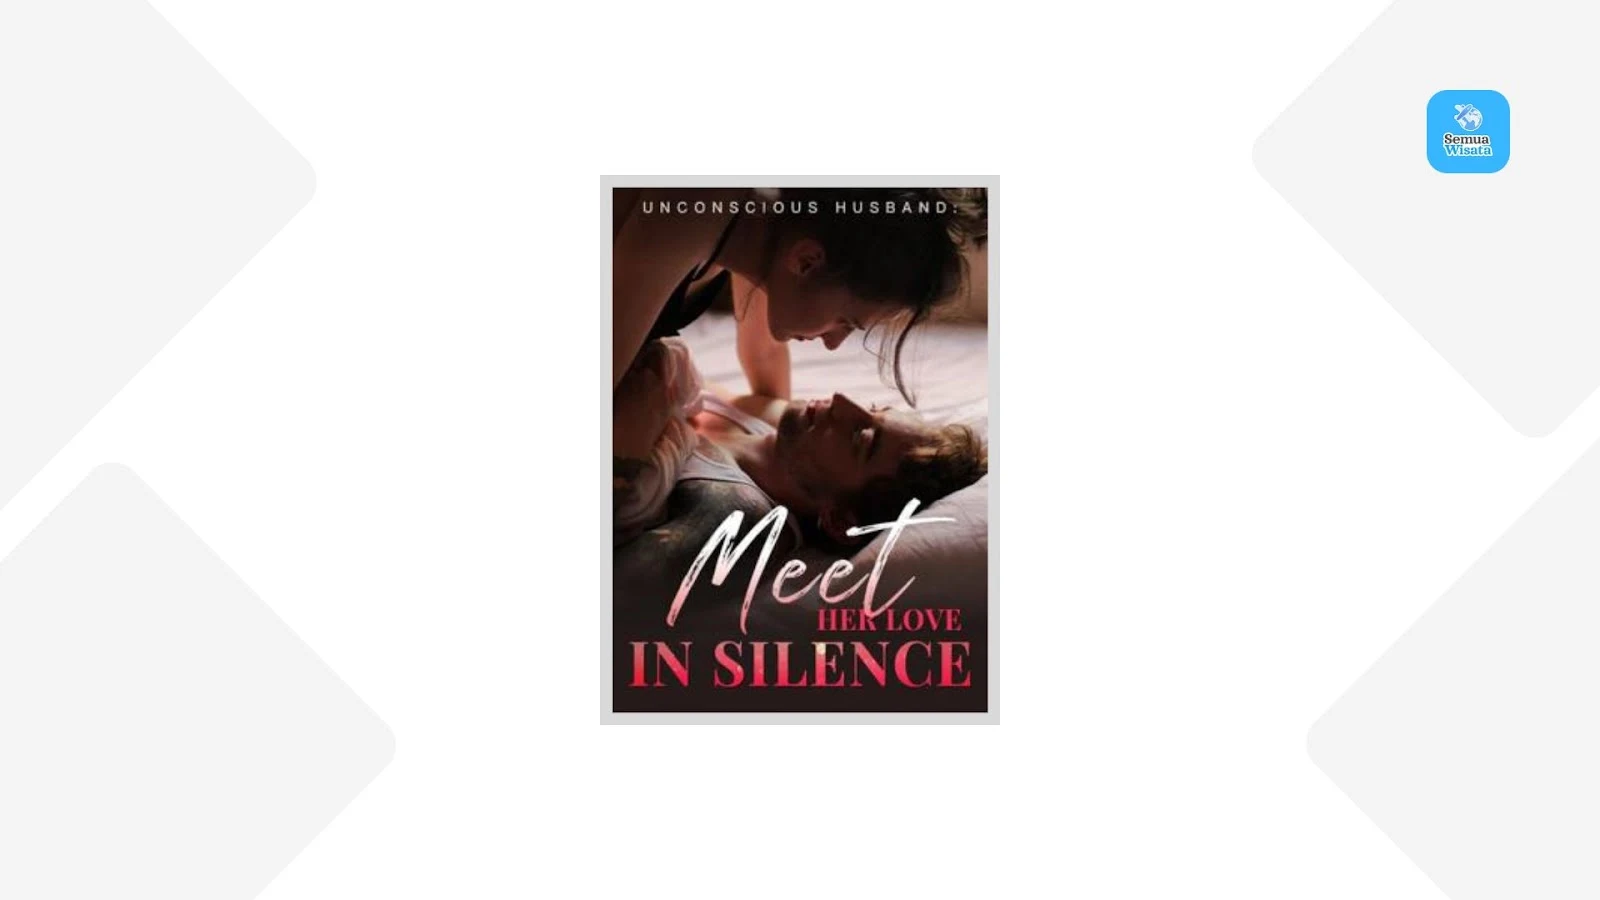 Read Novel Unconscious Husband: Meet Her Love In Silence by Ken Slaner